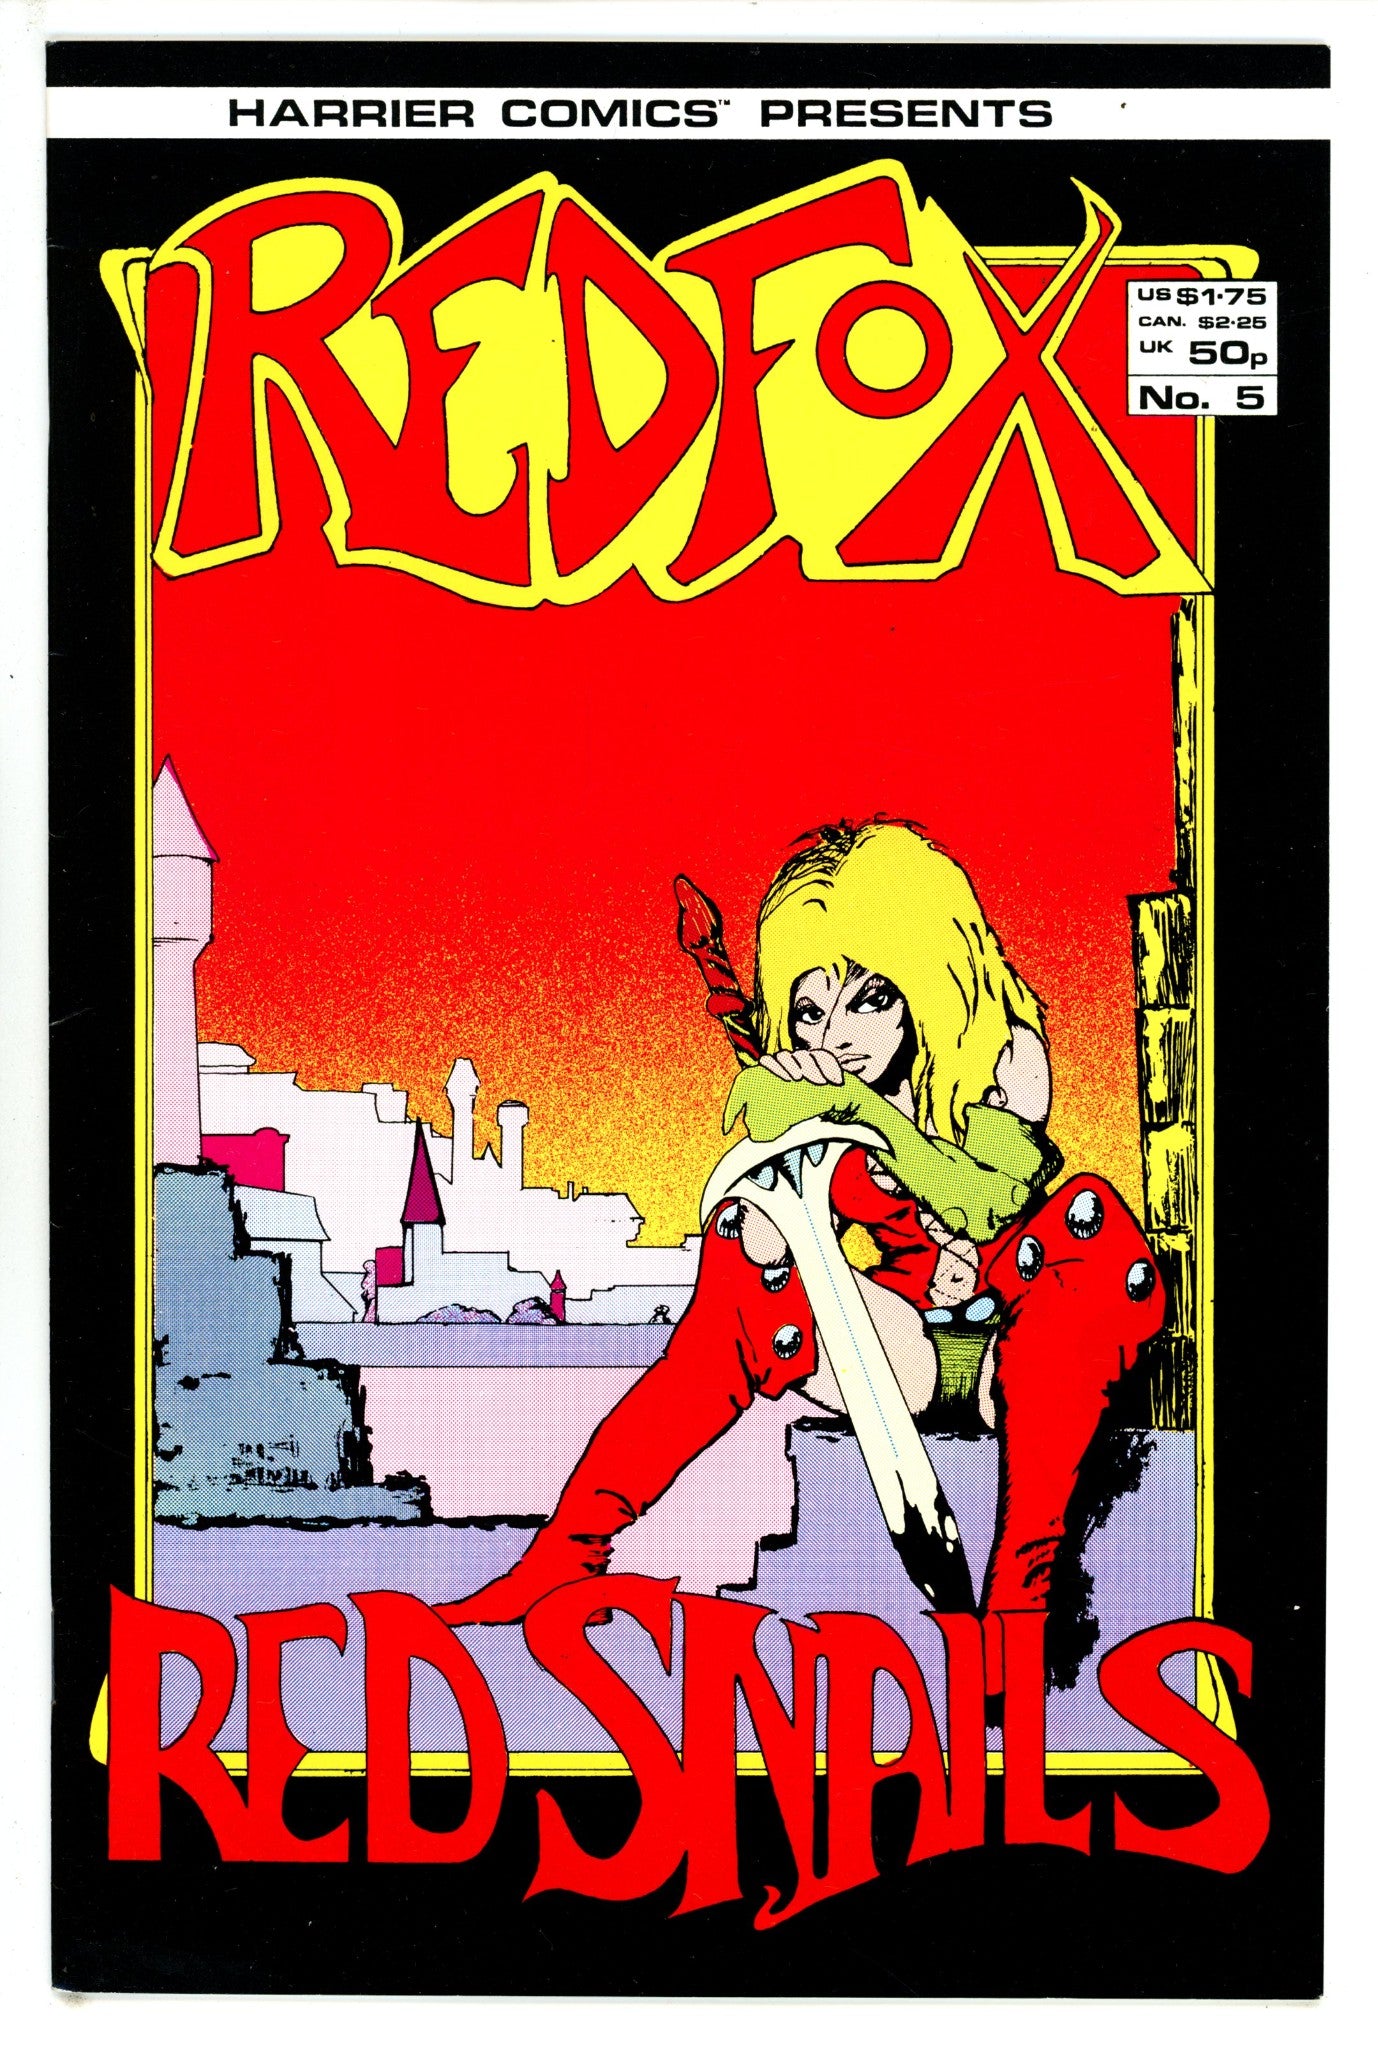 Redfox 5 (1986)